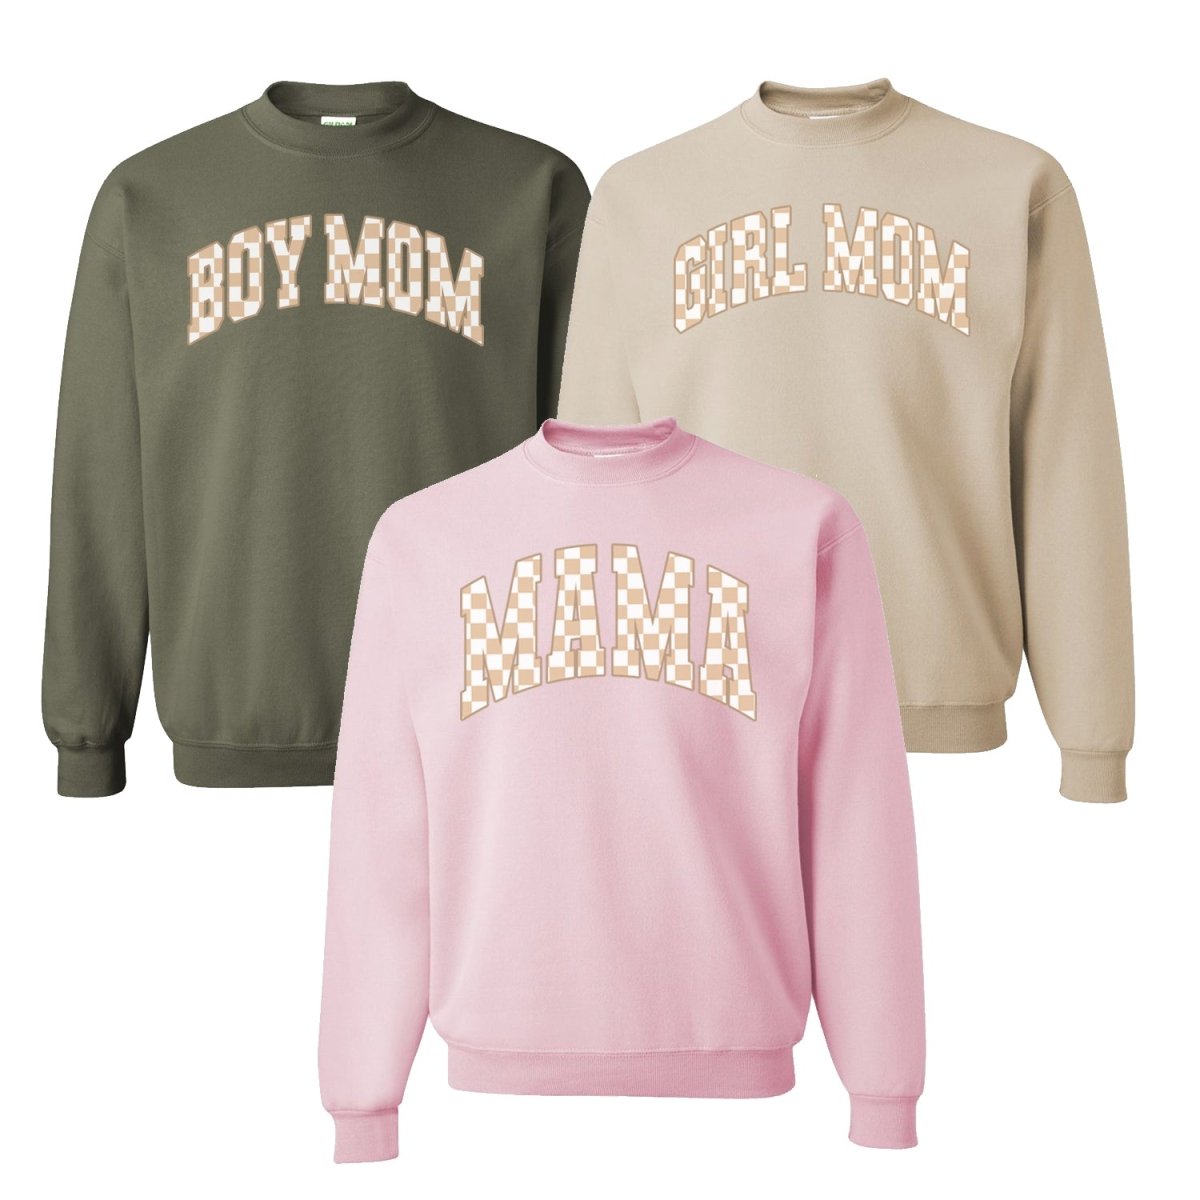 'Mama Tan Check' Crewneck Sweatshirt - United Monograms